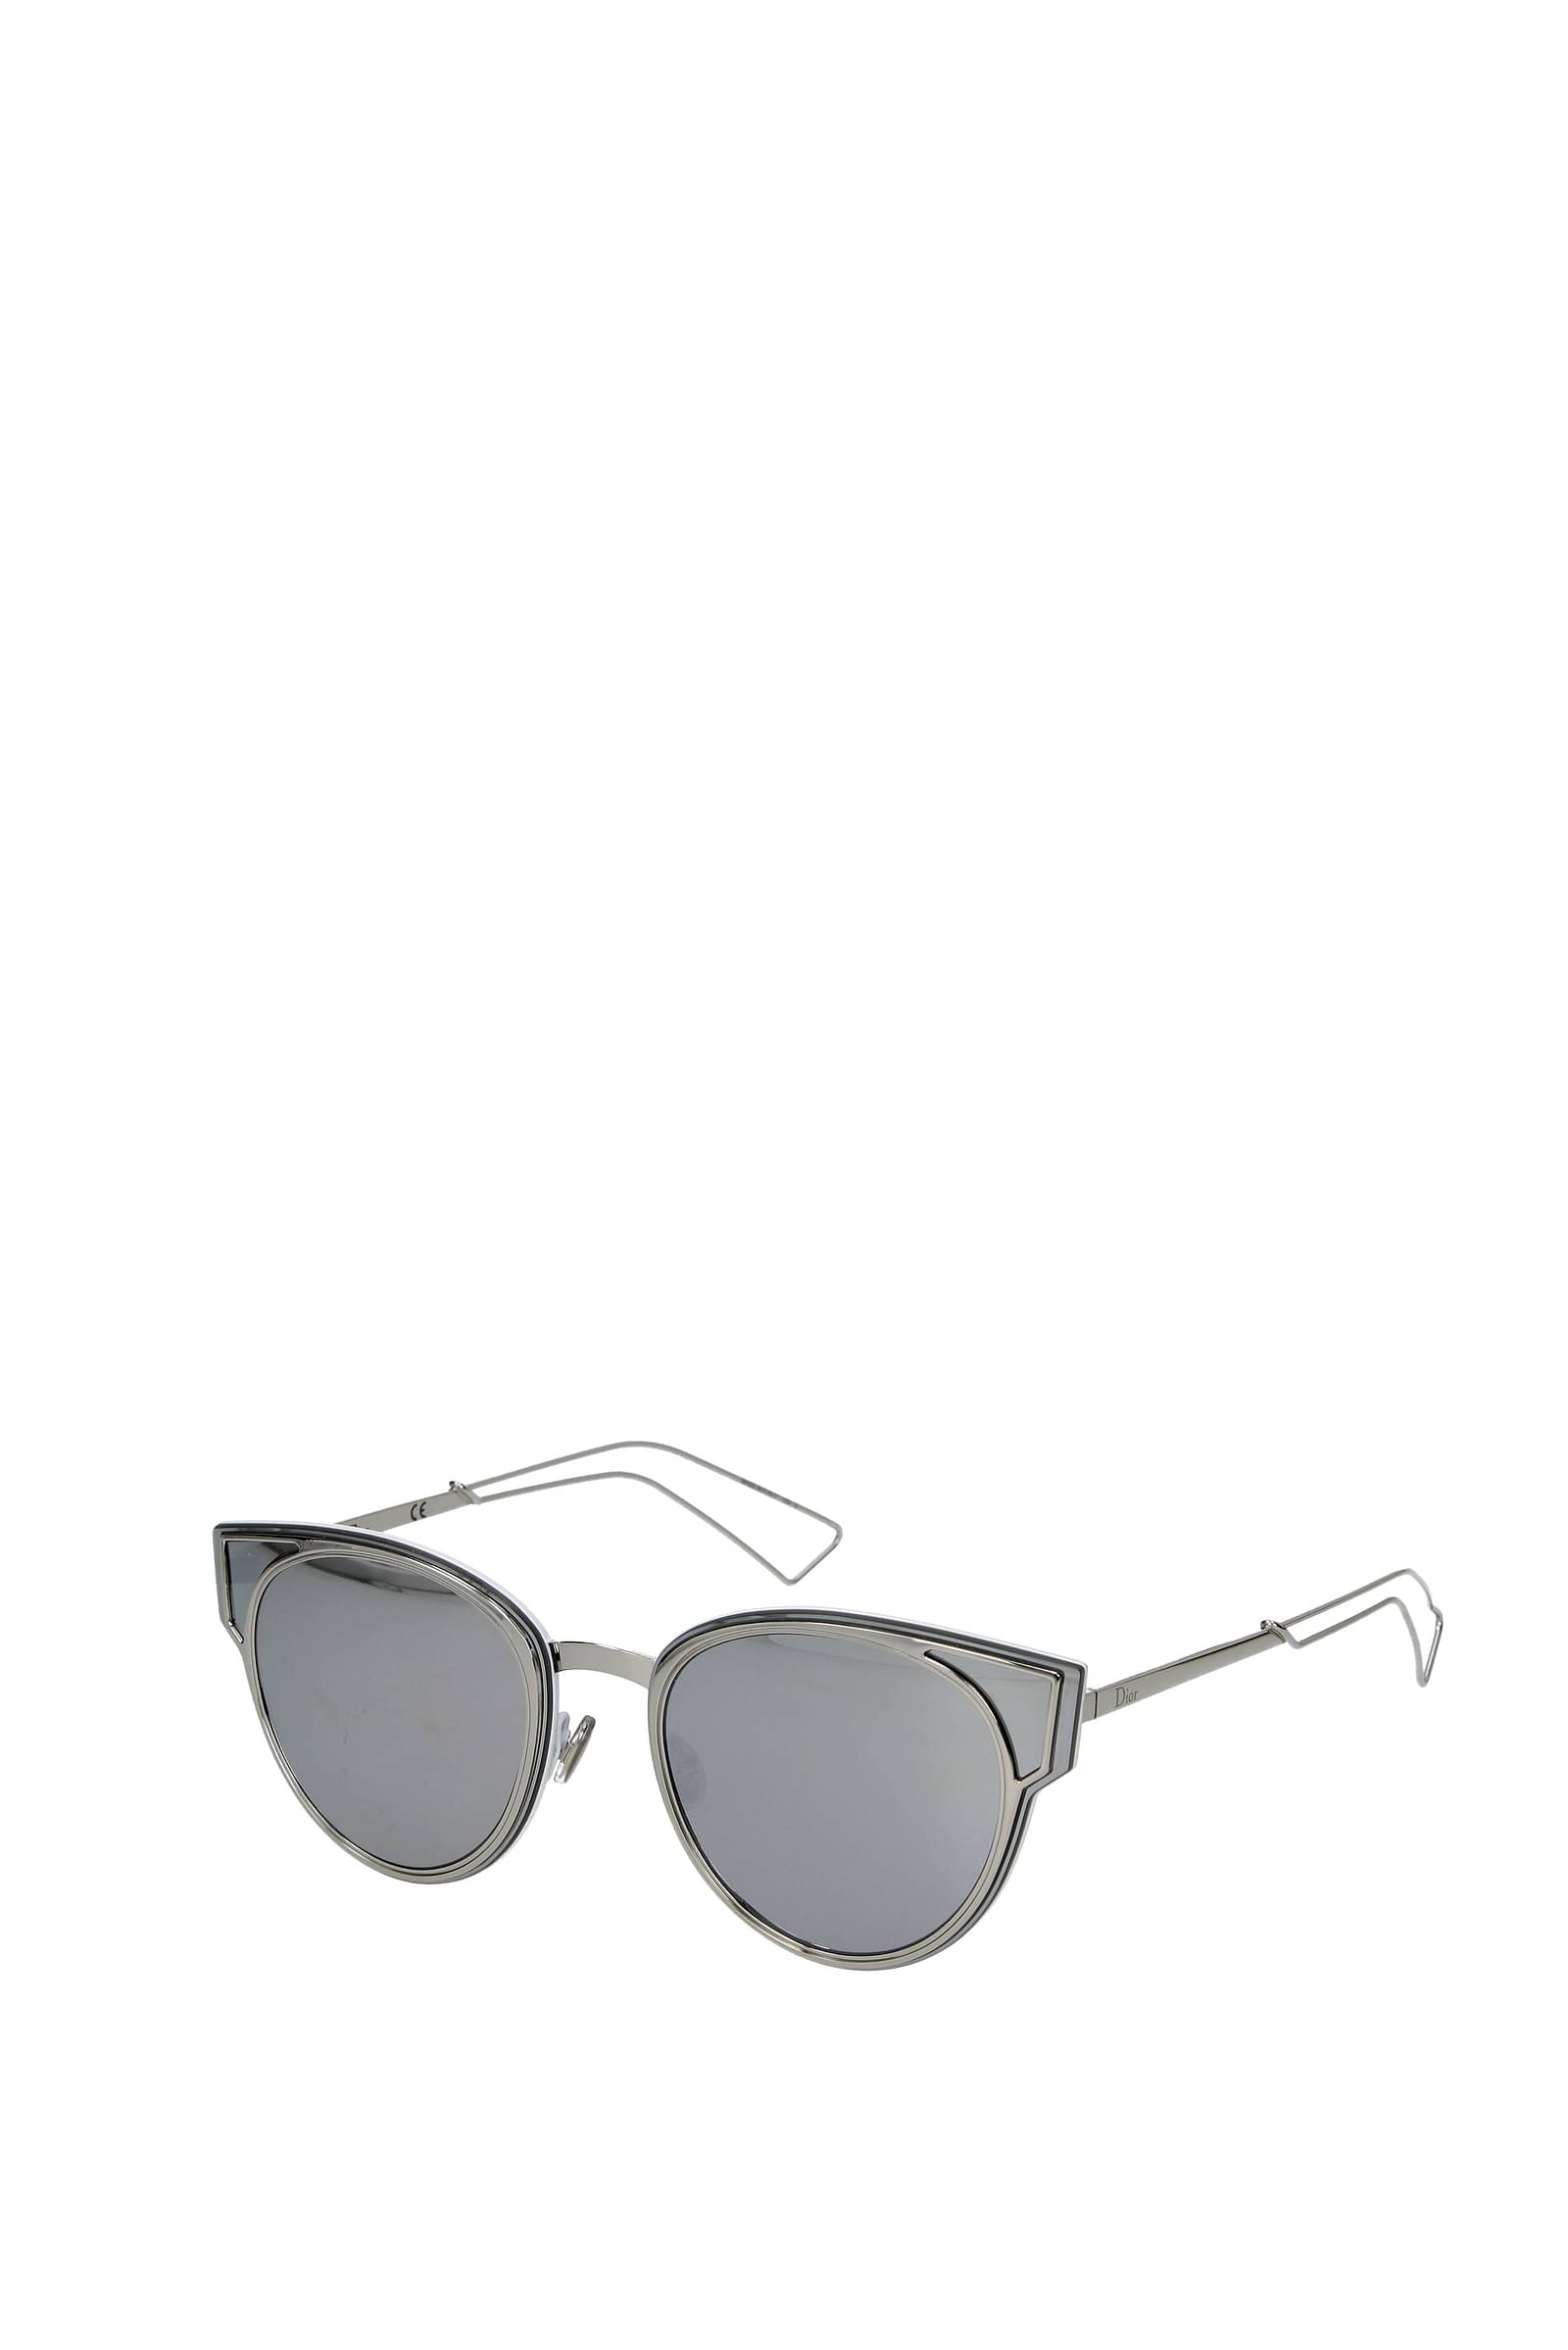 Metallic Saint Laurent Sunglasses in Silver - Save 51% Womens Sunglasses Saint Laurent Sunglasses 